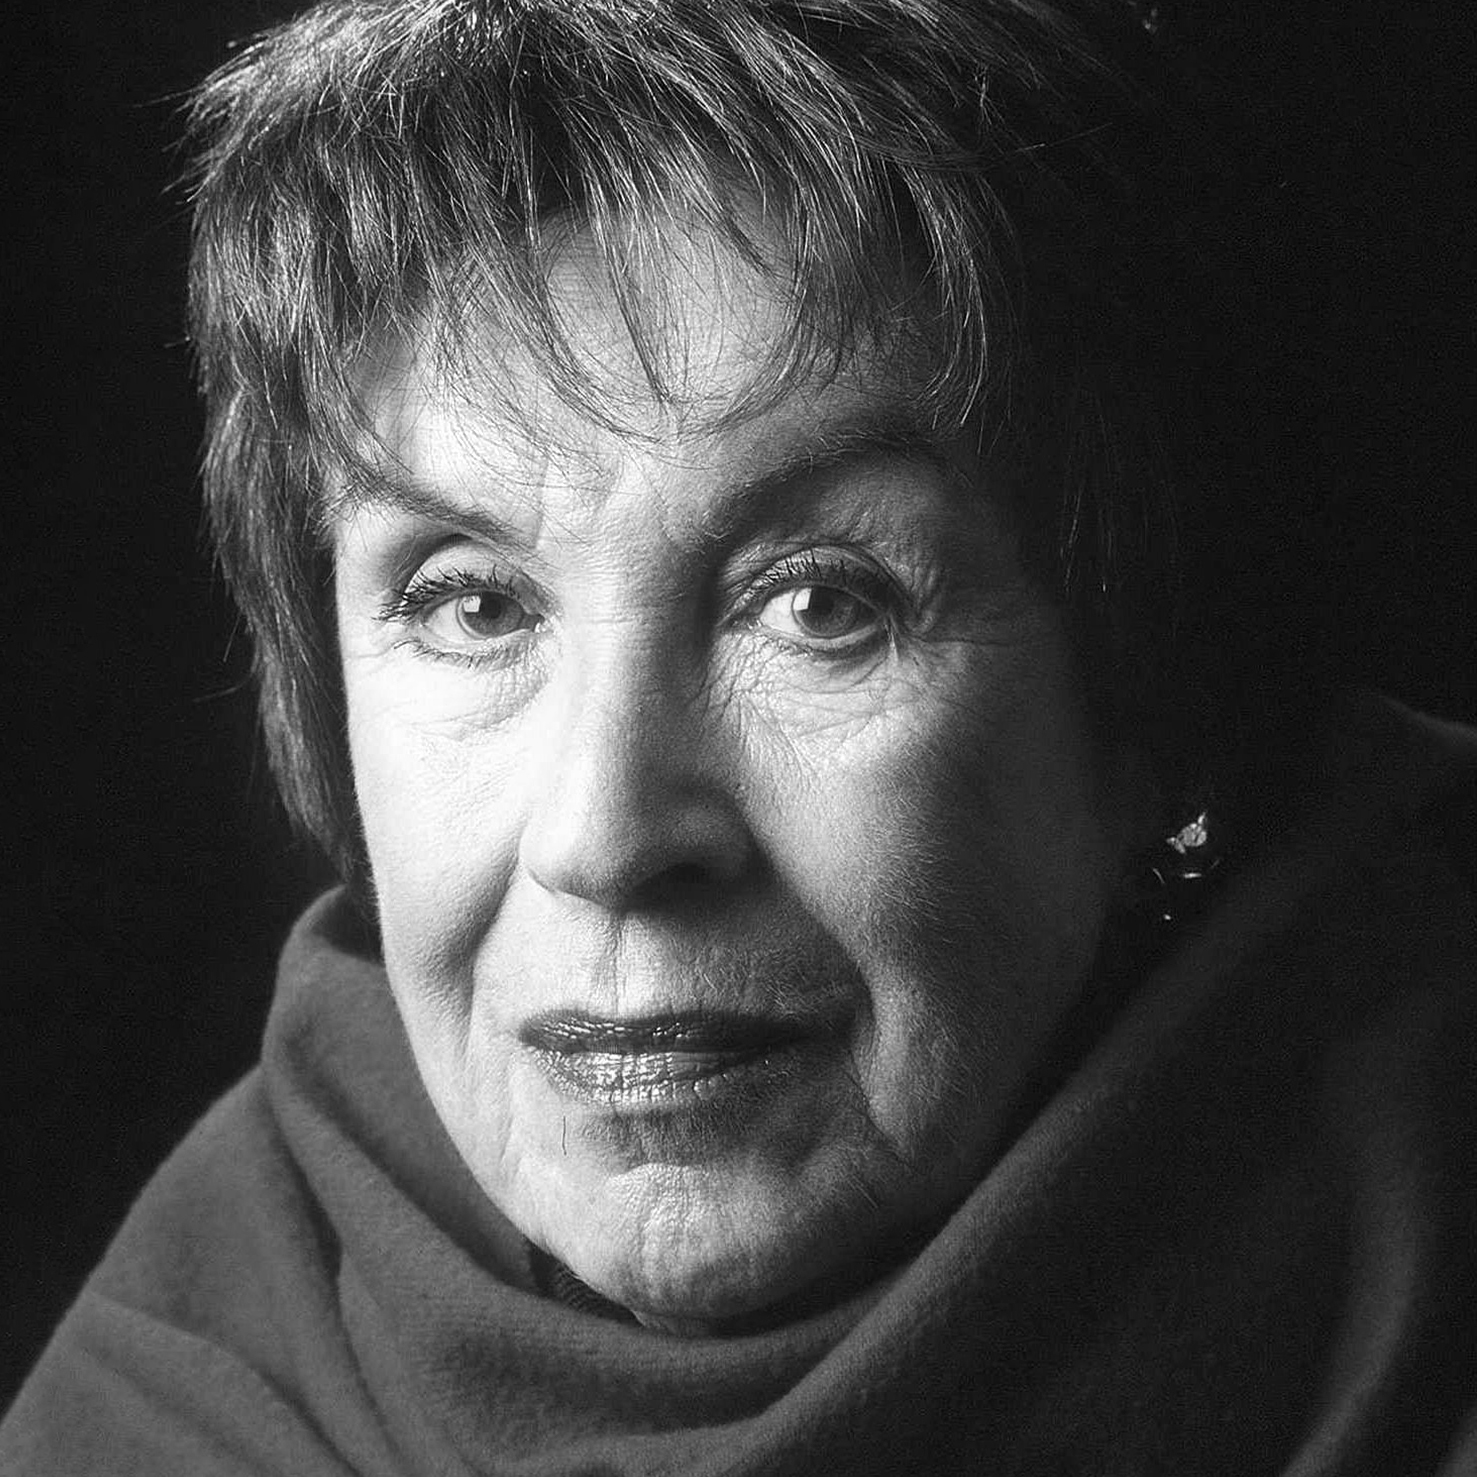 Maria Becker dies aged 92